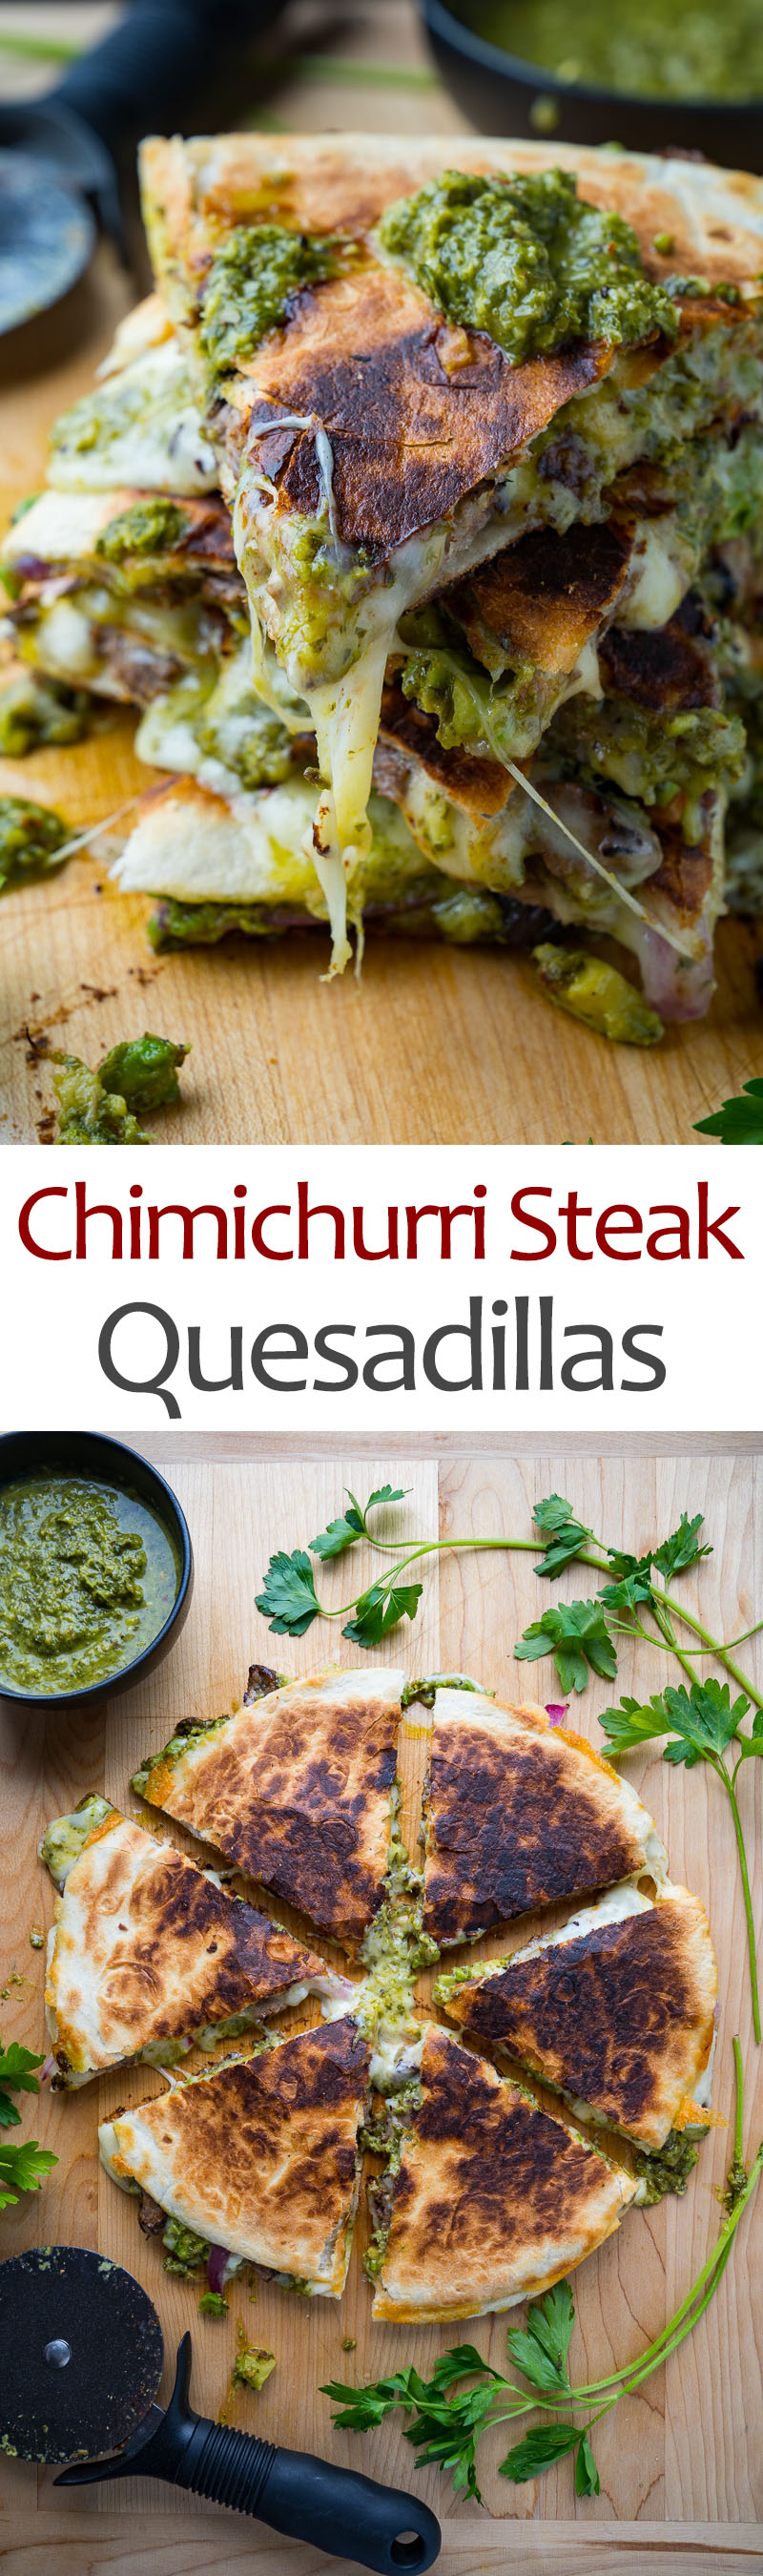 Chimichurri Steak Quesadillas with Avocado Chimichurri